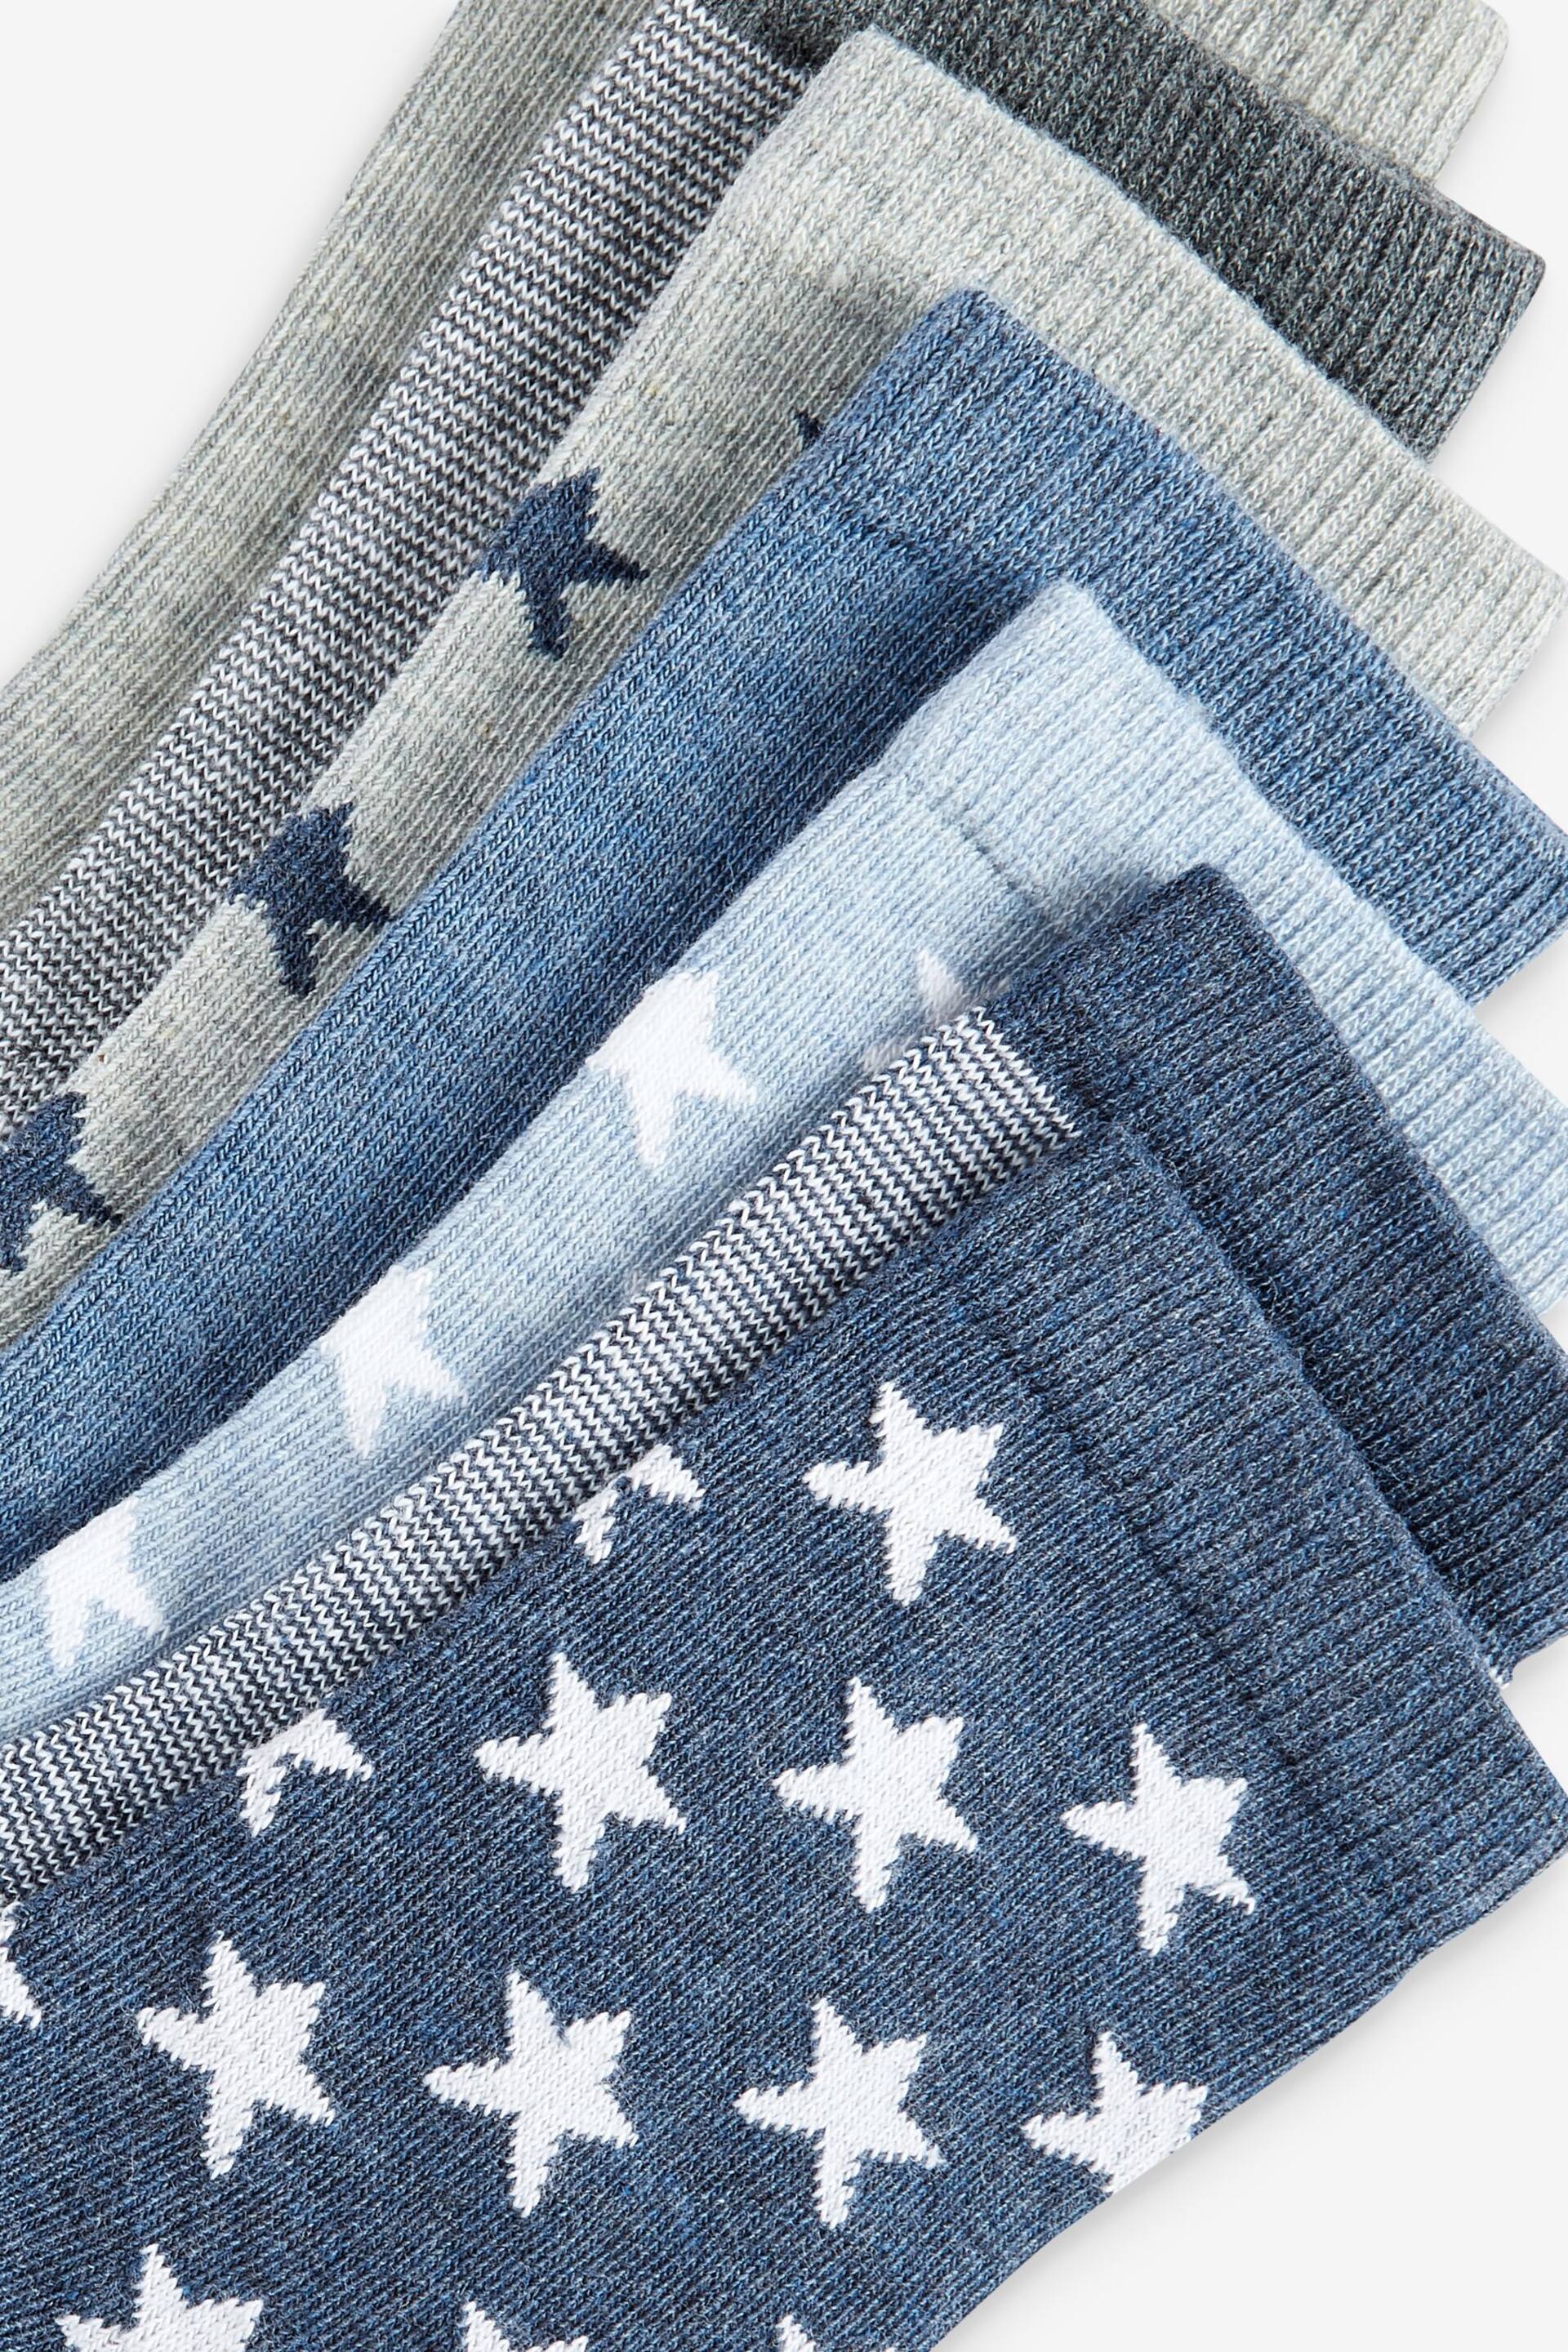 Blue Stars Cotton Rich Socks 7 Pack - Image 9 of 9